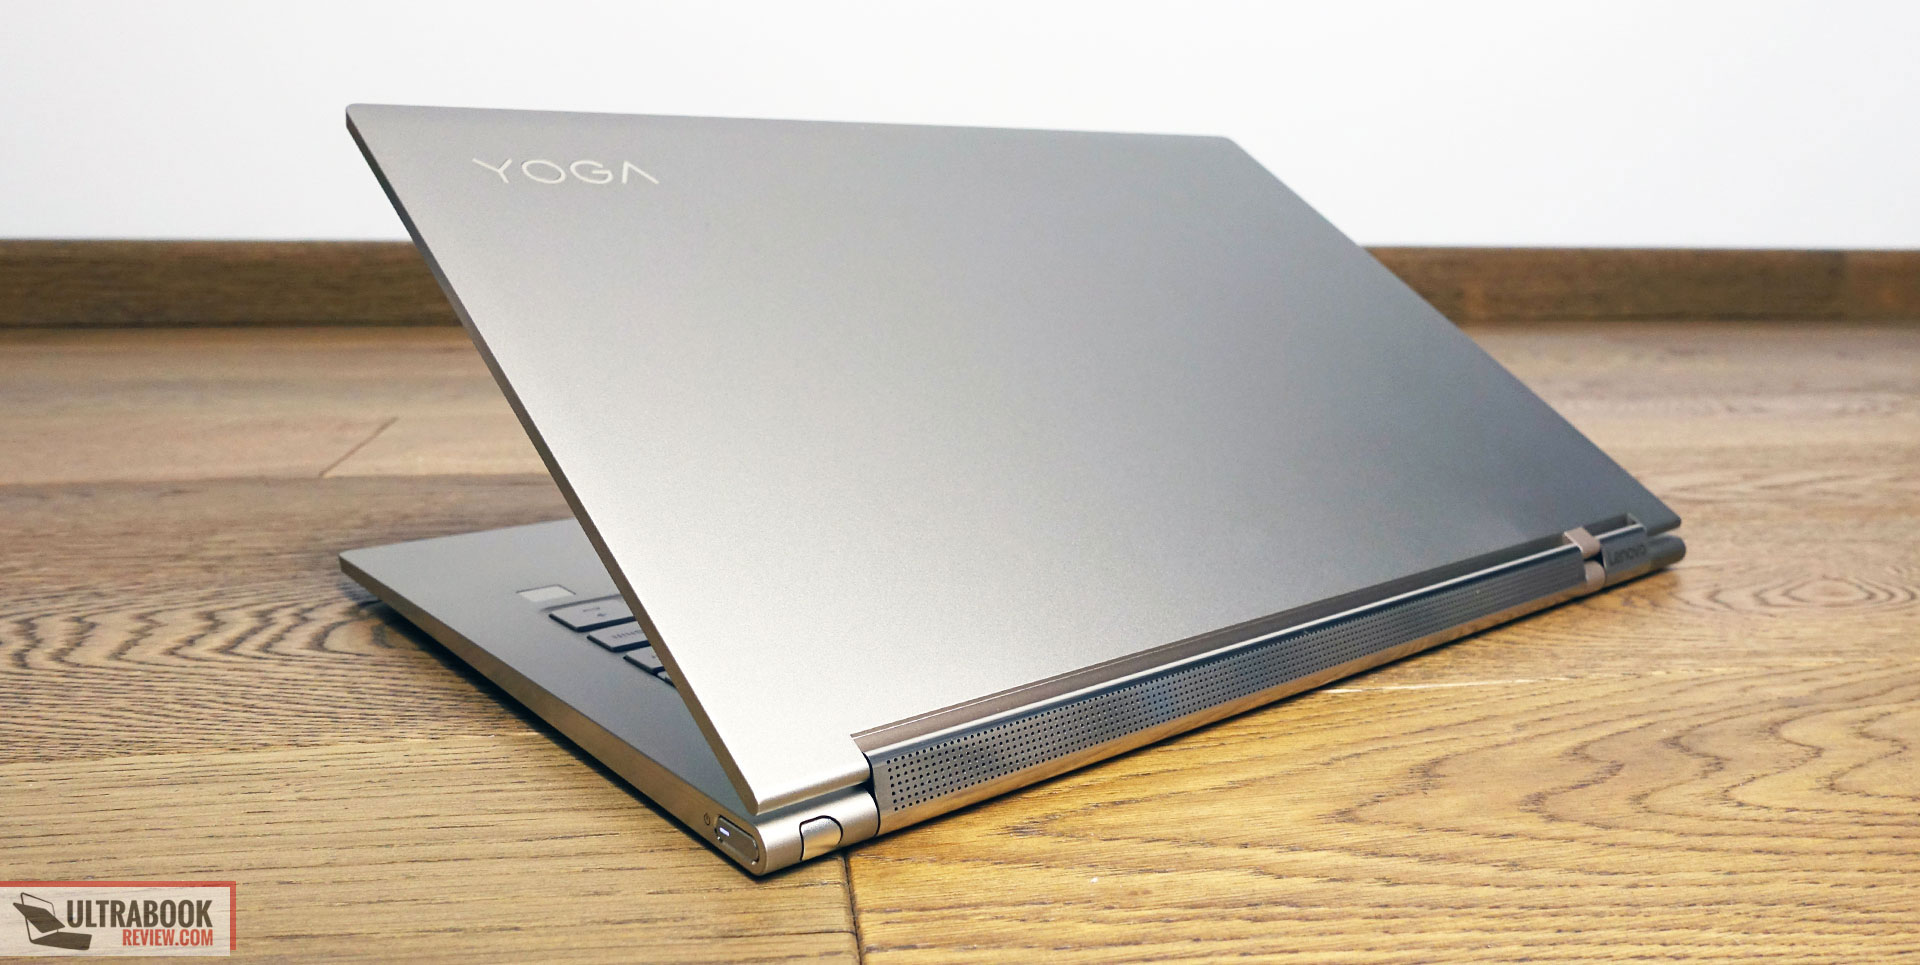 Yoga C930 review (i7-8550U, GB RAM, UHD screen)